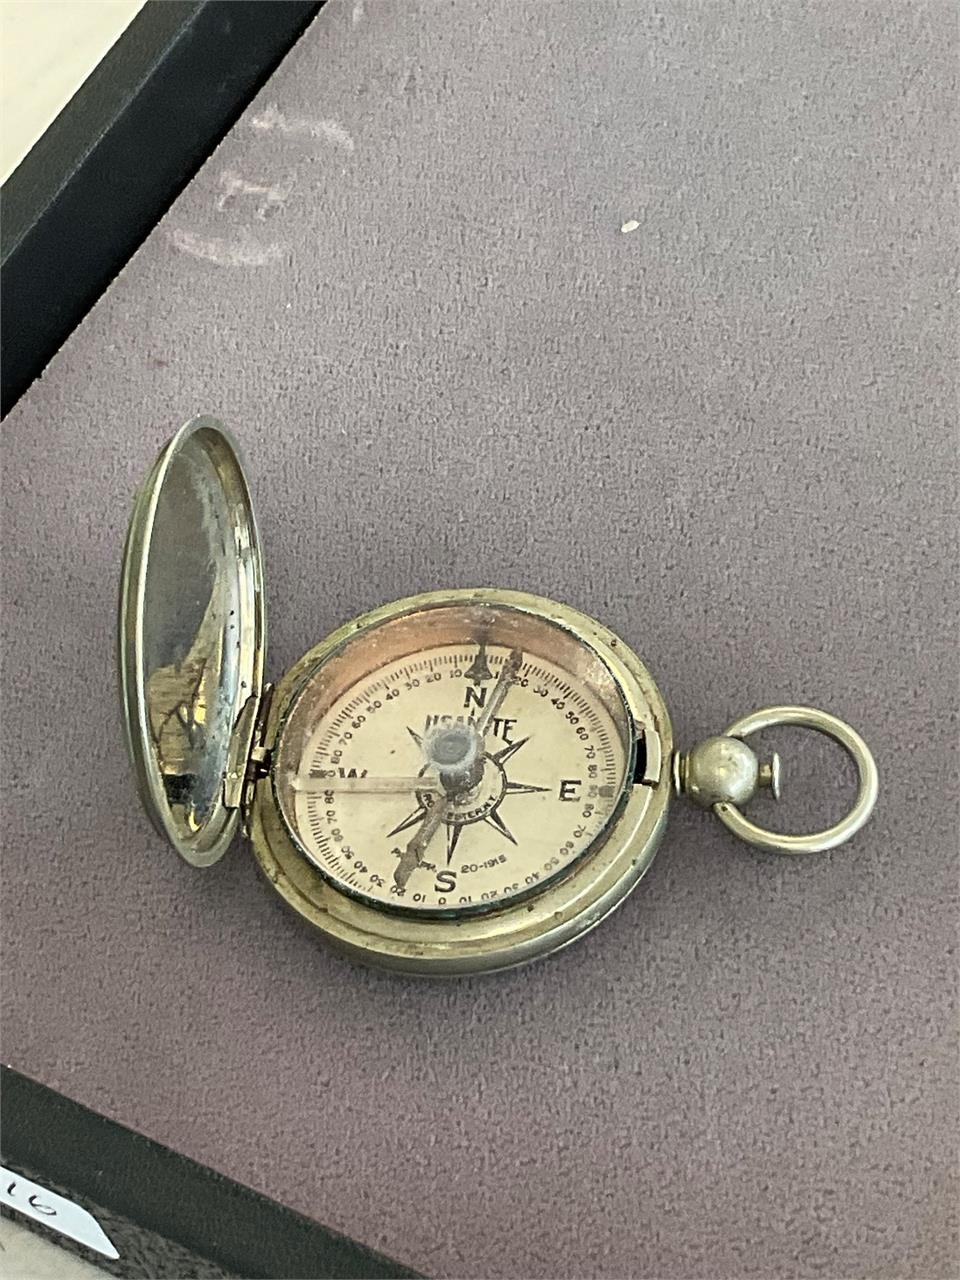 Vintage WW1 Usanite Compass